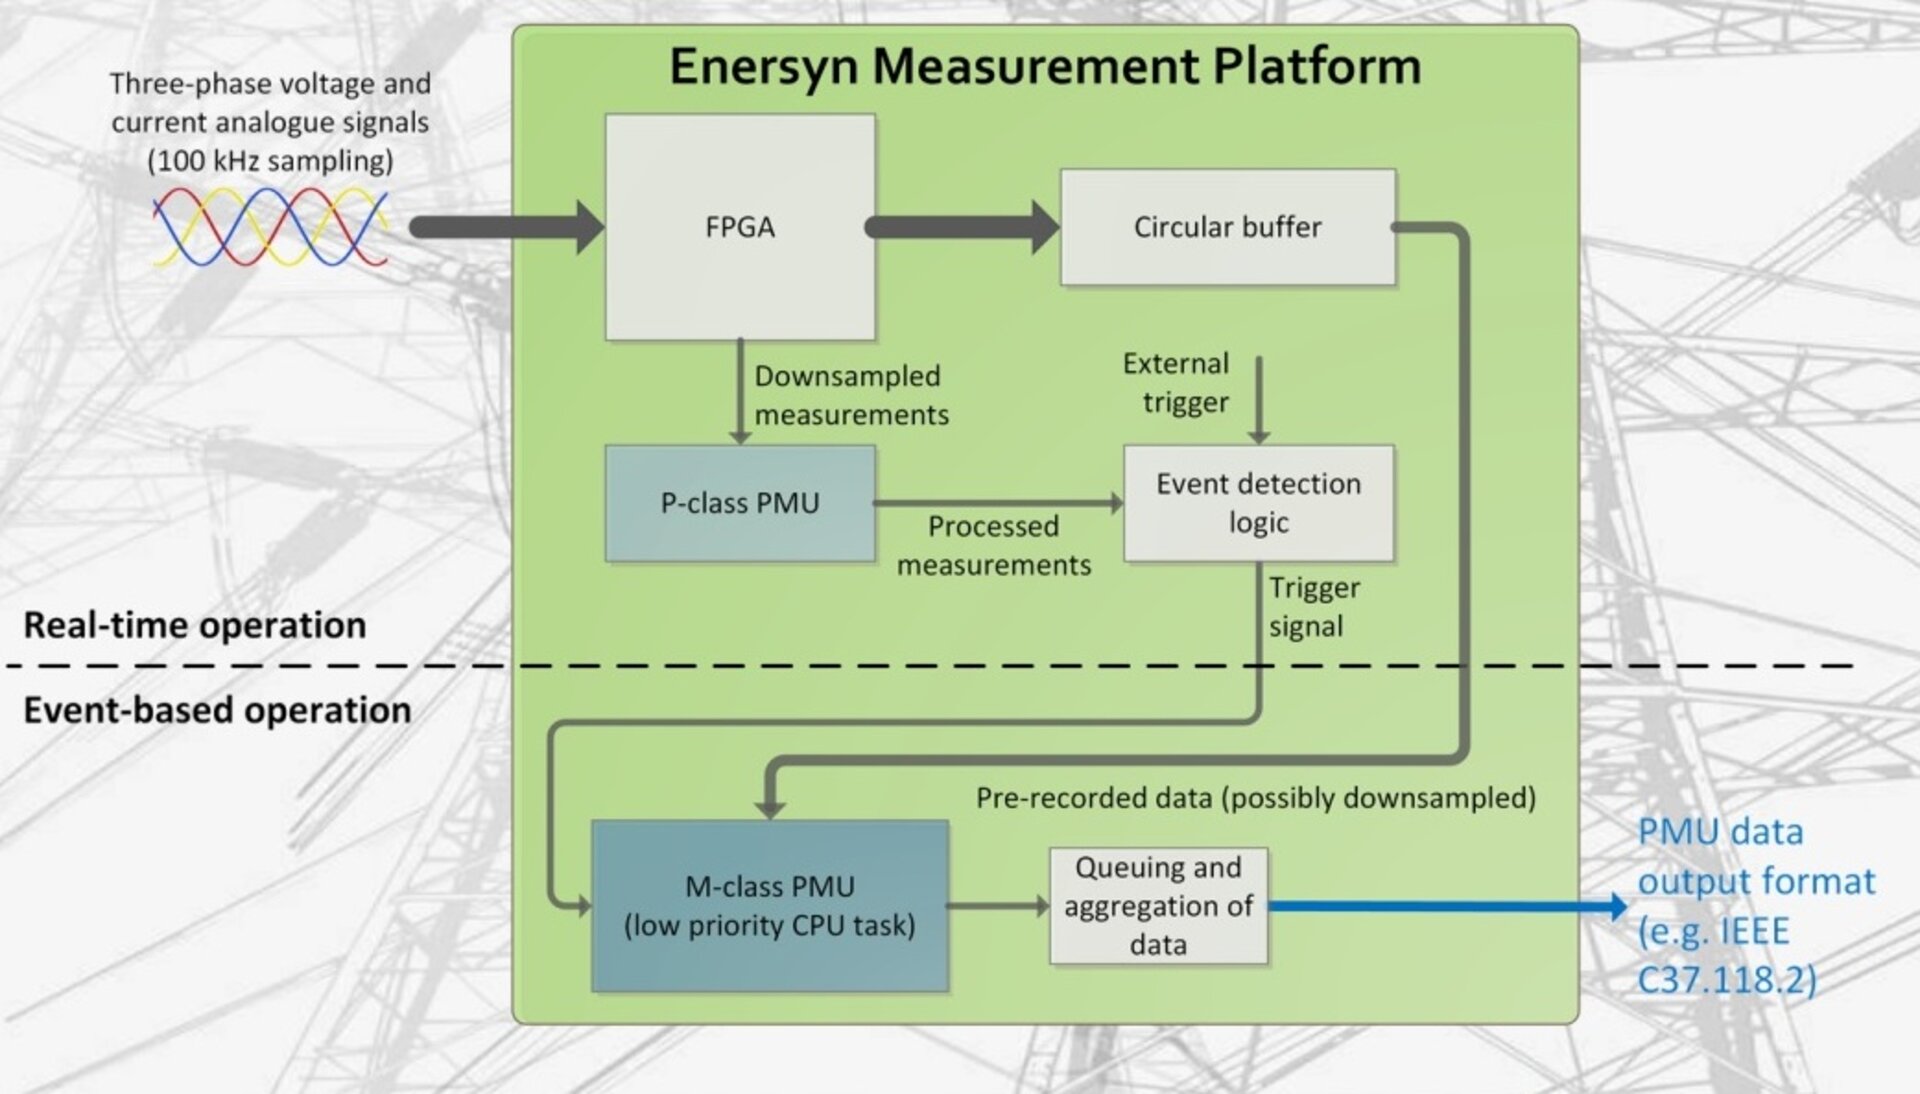 Enersyn measuring platform